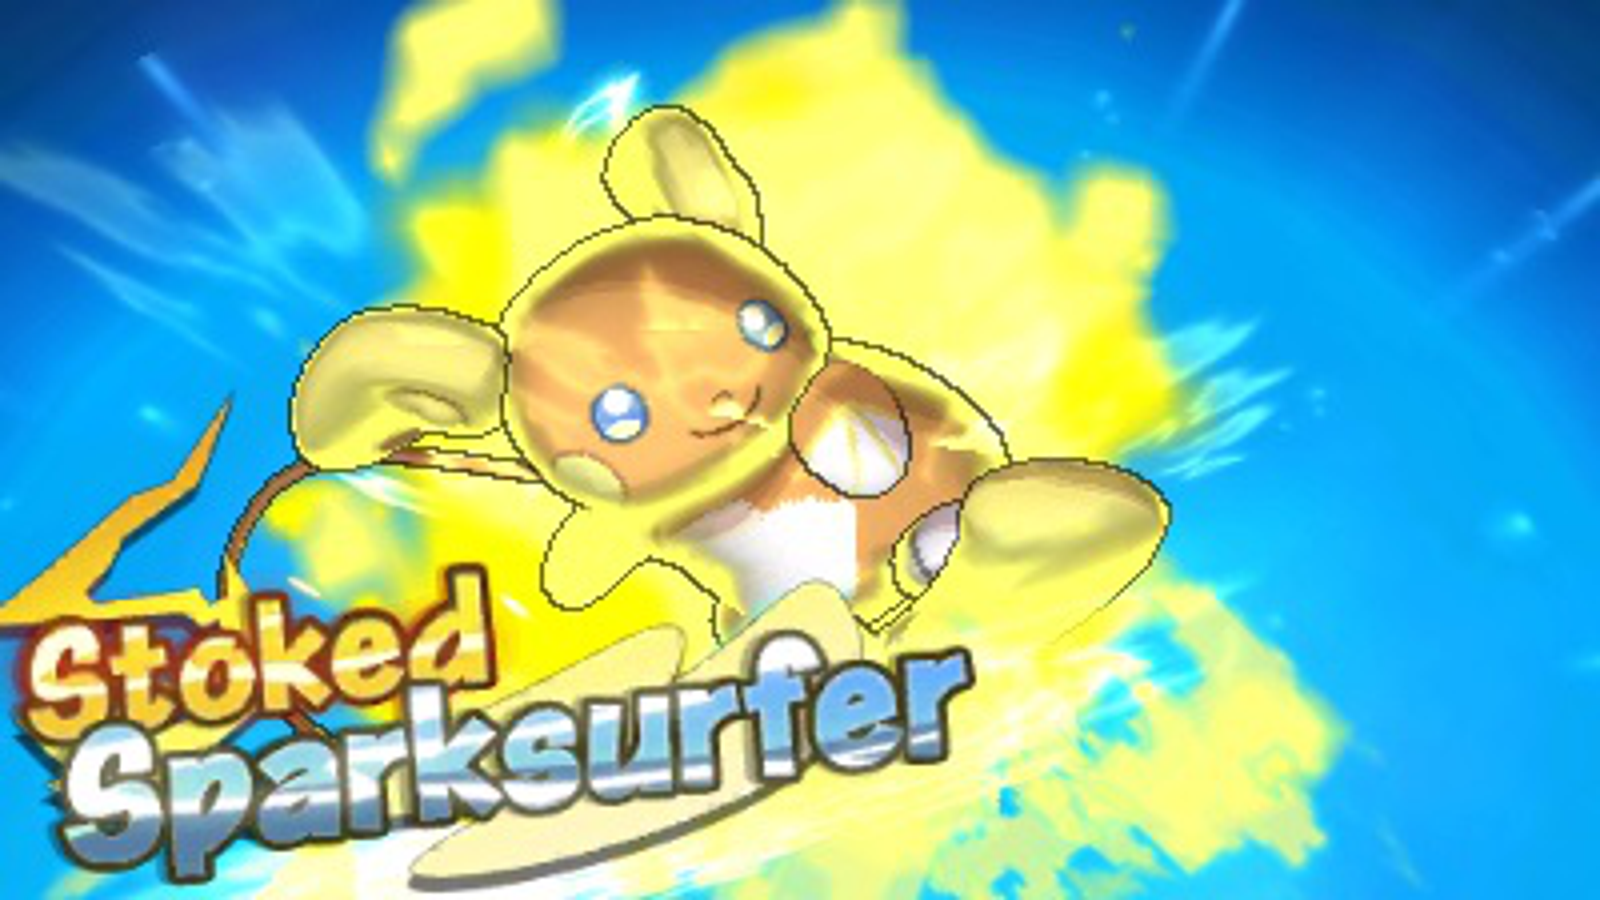 Pokemon GO: How To Get Shiny Pikachu and Shiny Raichu wearing a